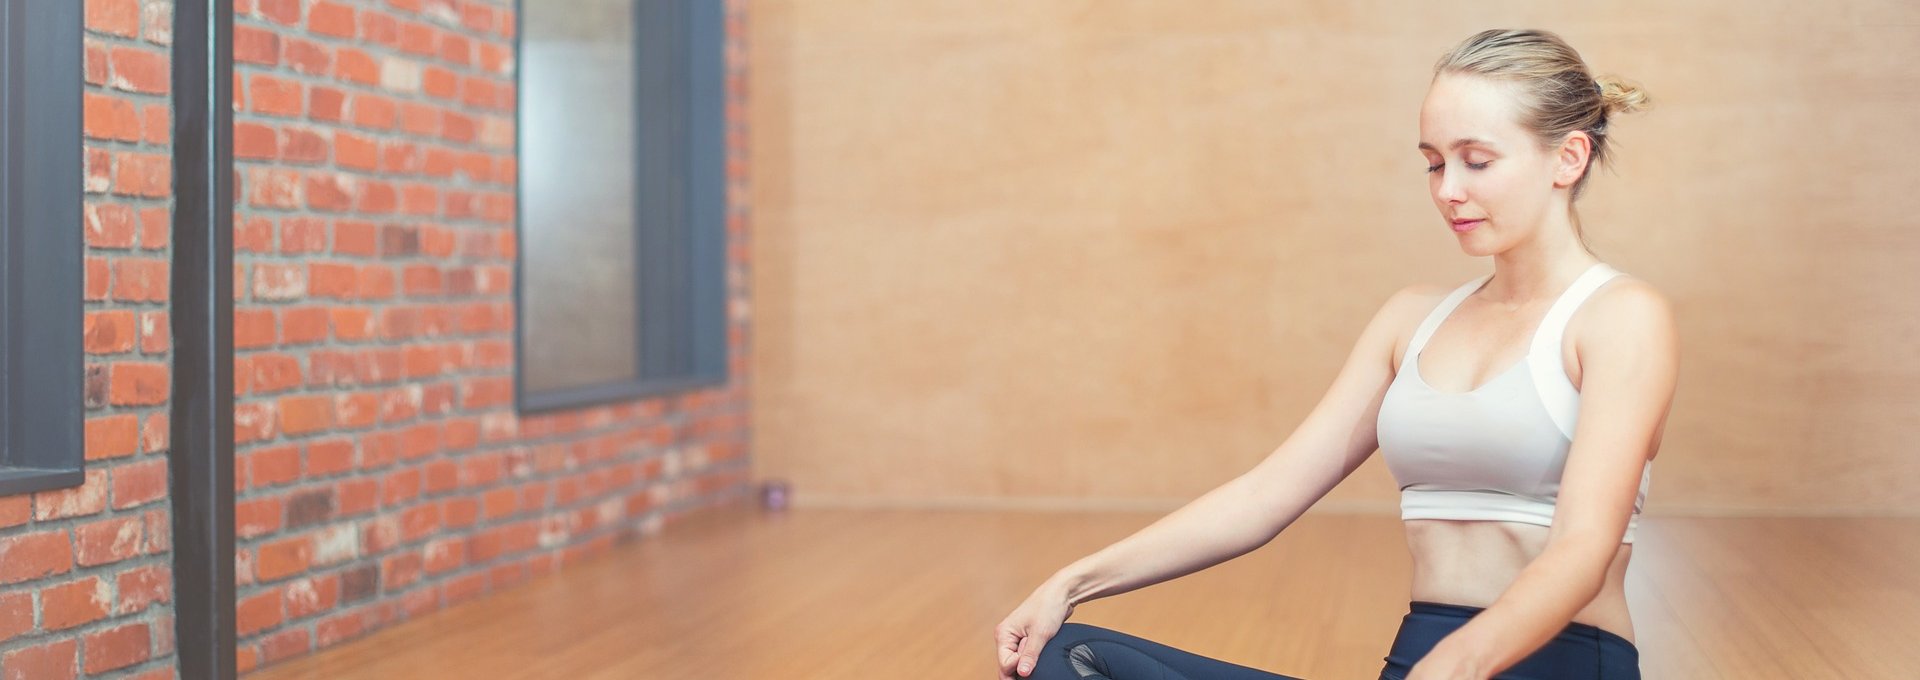 Frau auf Fitnessmatte macht Yoga